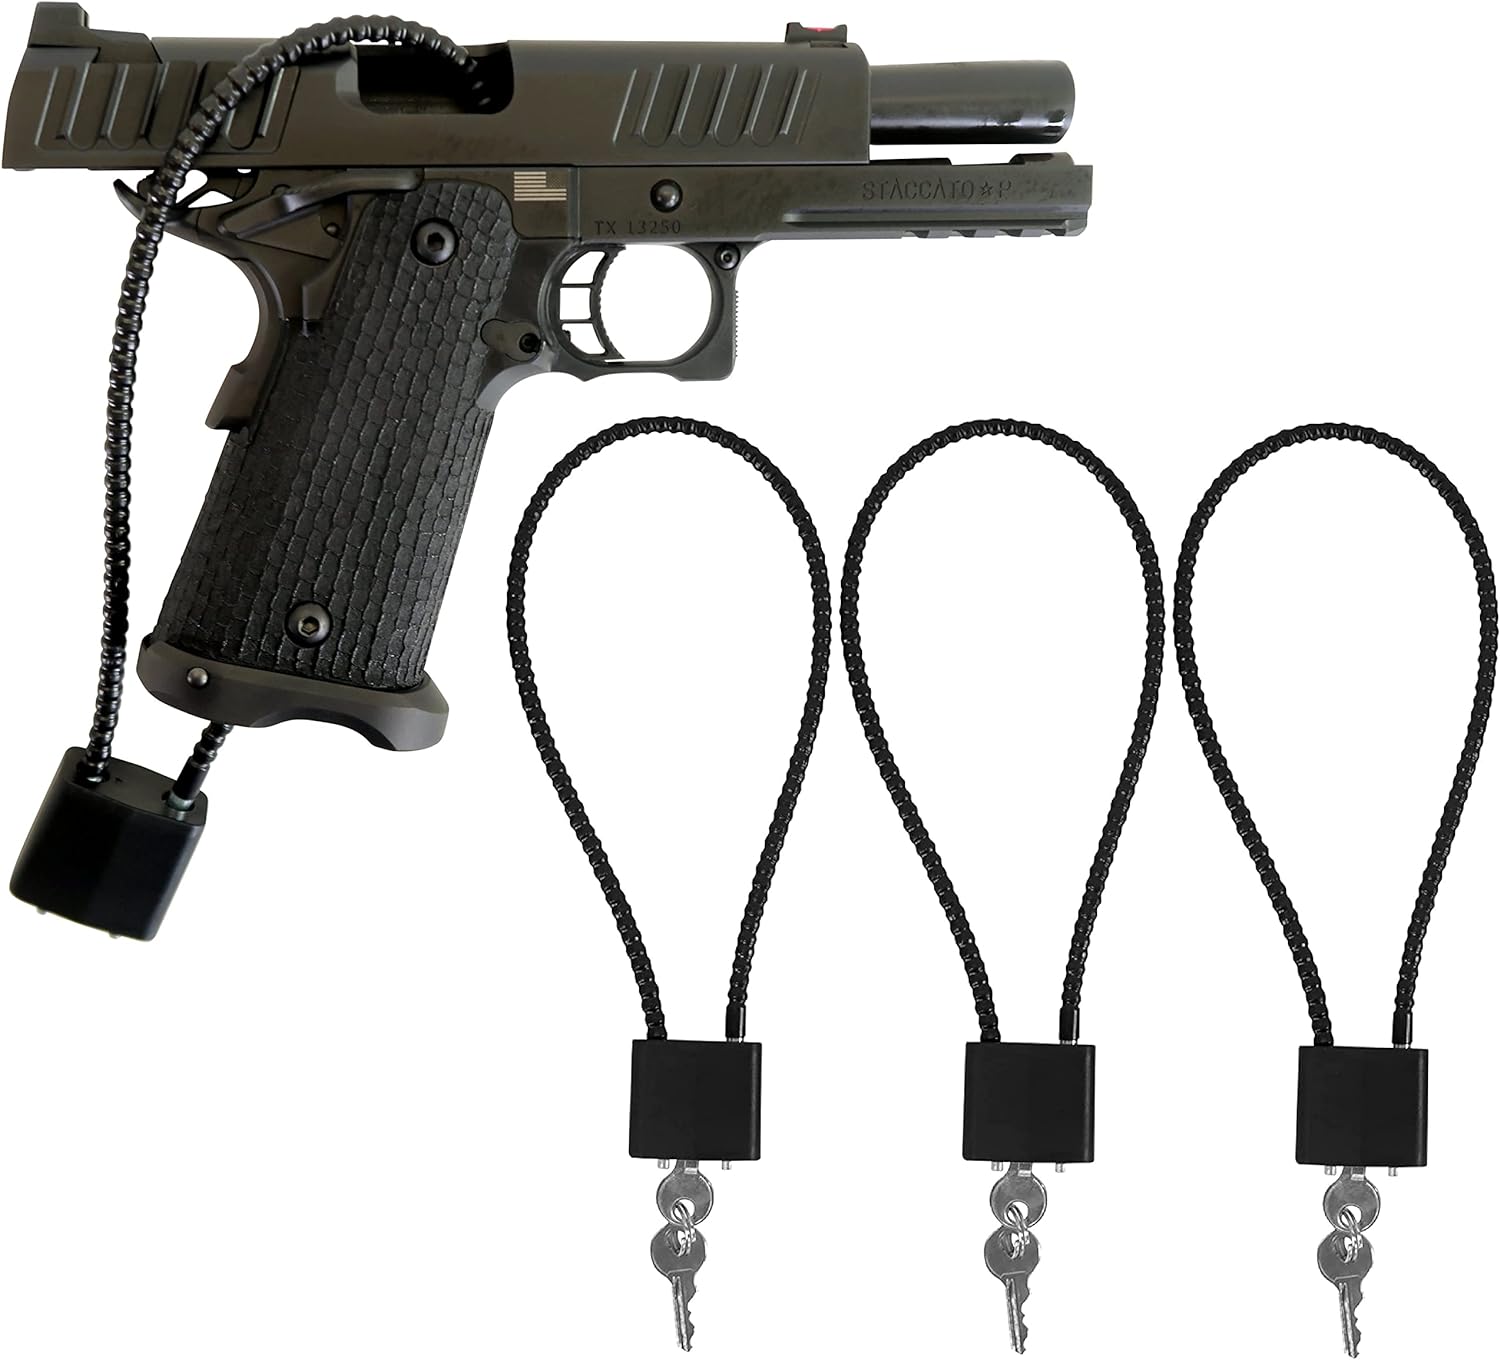 DELSWIN Cable Gun Locks with Keys - 15 Keyed Cable Gun Lock Heavy Duty  Helmet Lock Fits Pistols Rifles Shotguns Handguns BB Guns (3 Pack) Black3Pcs